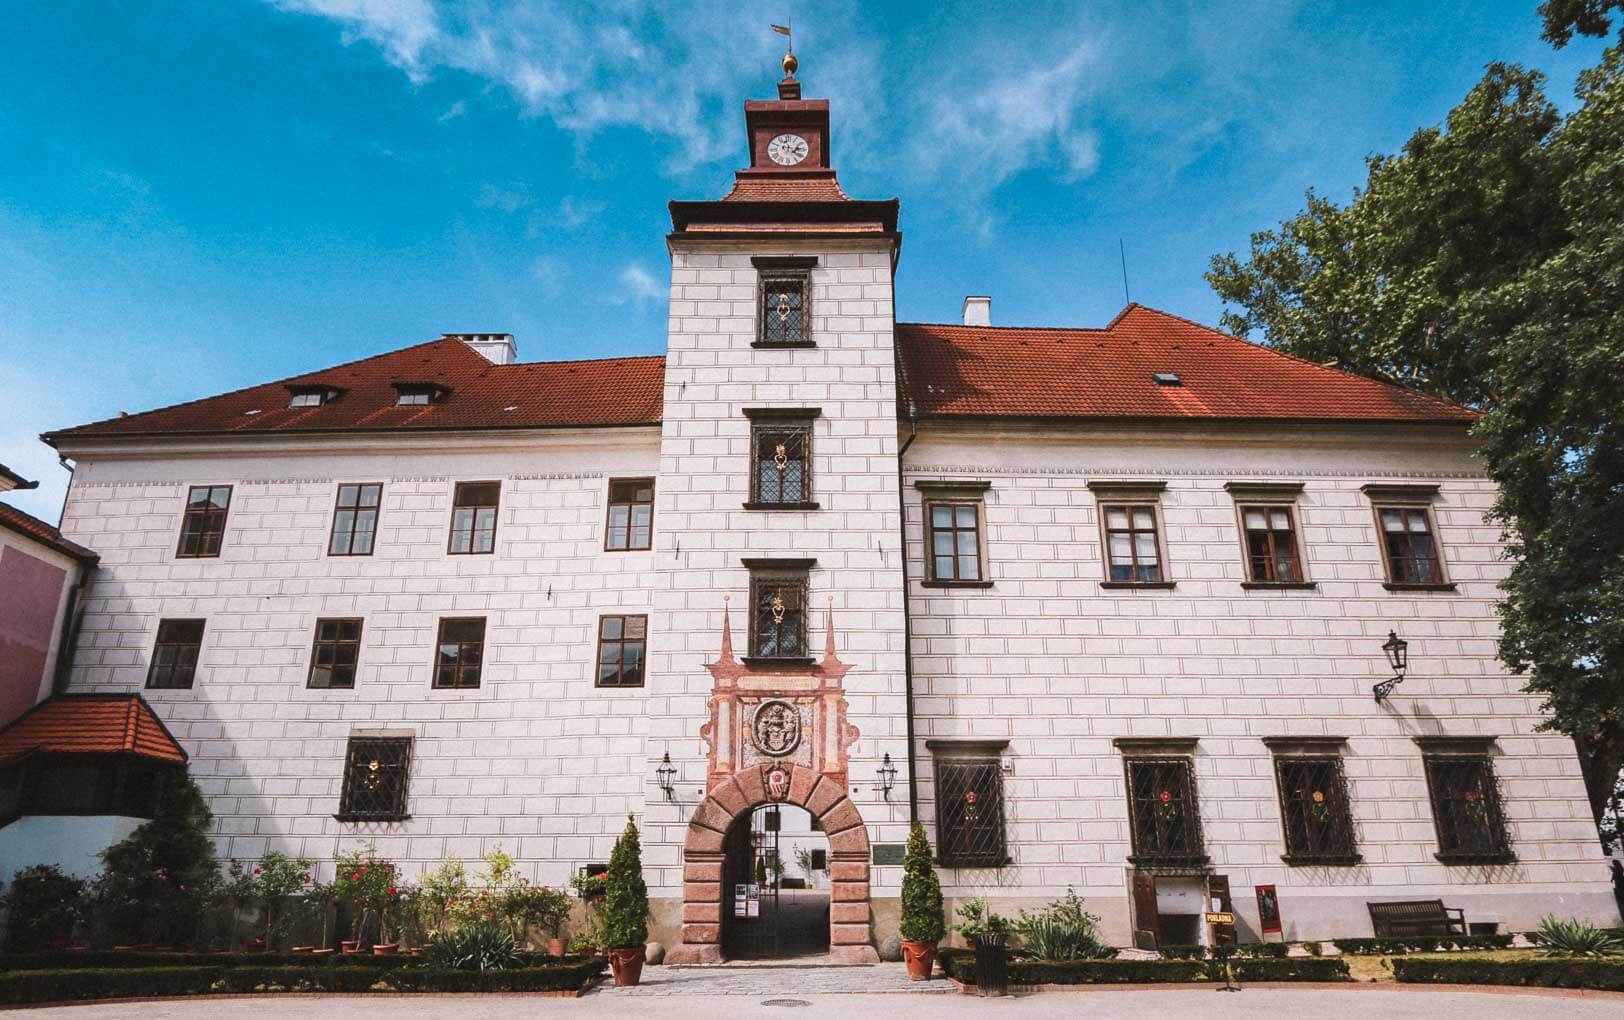 Trebon Castle Fairy-Tale Castles in Czech Republic That You Didn't Know About